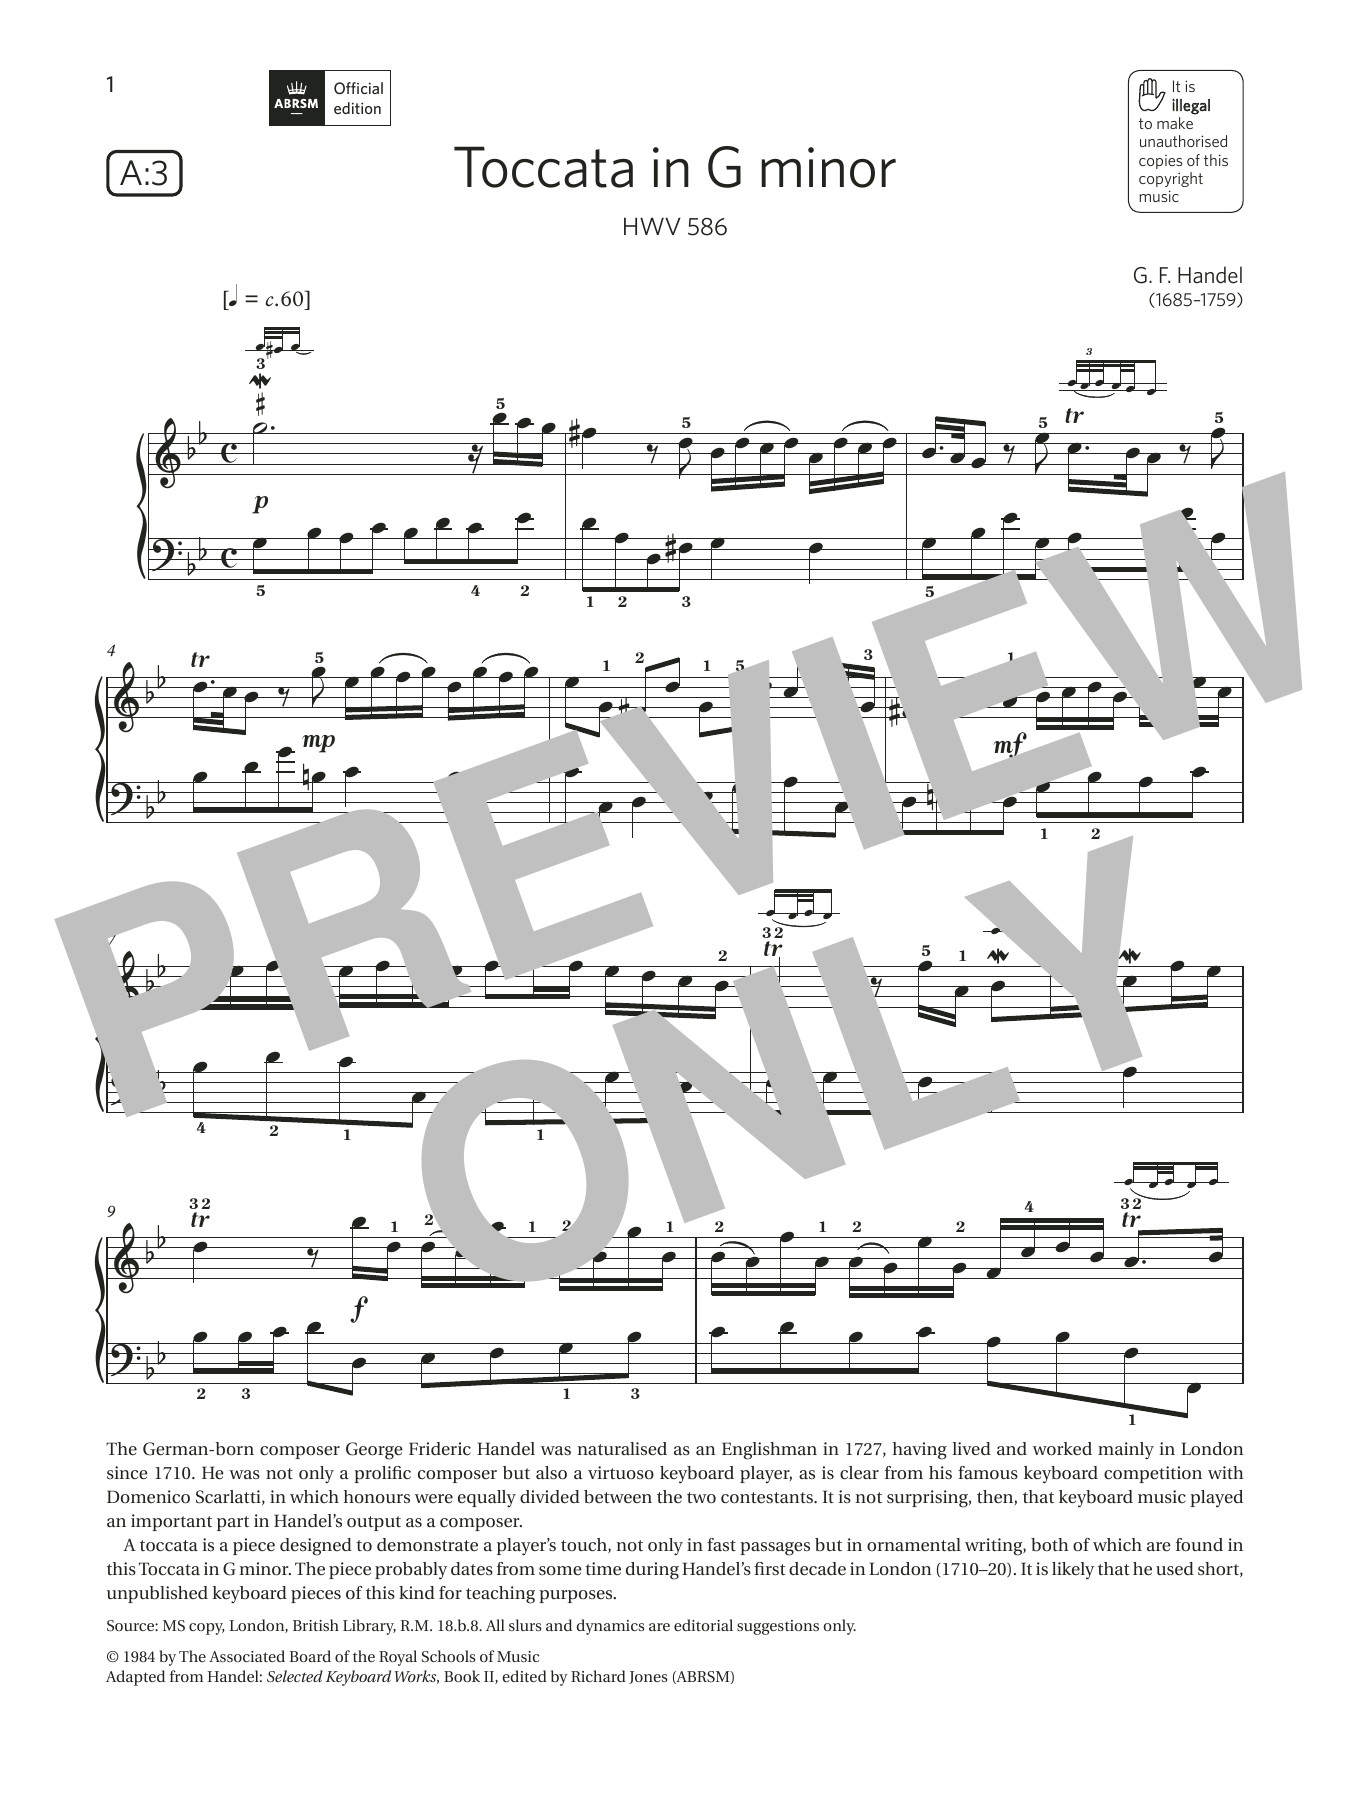 Download G. F. Handel Toccata in G minor (Grade 5, list A3, f Sheet Music